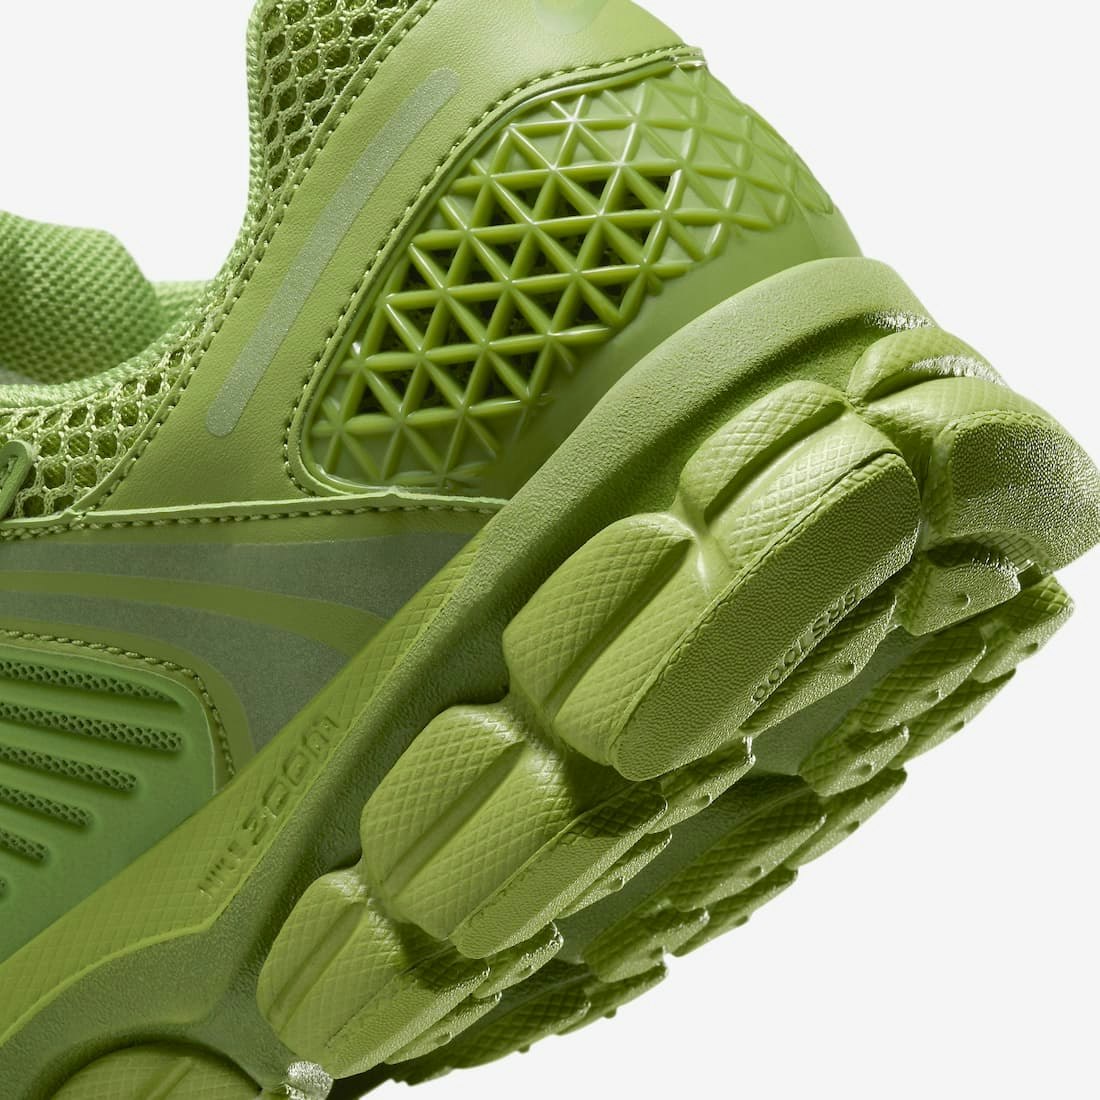 Nike Zoom Vomero 5 "Chlorophyll"